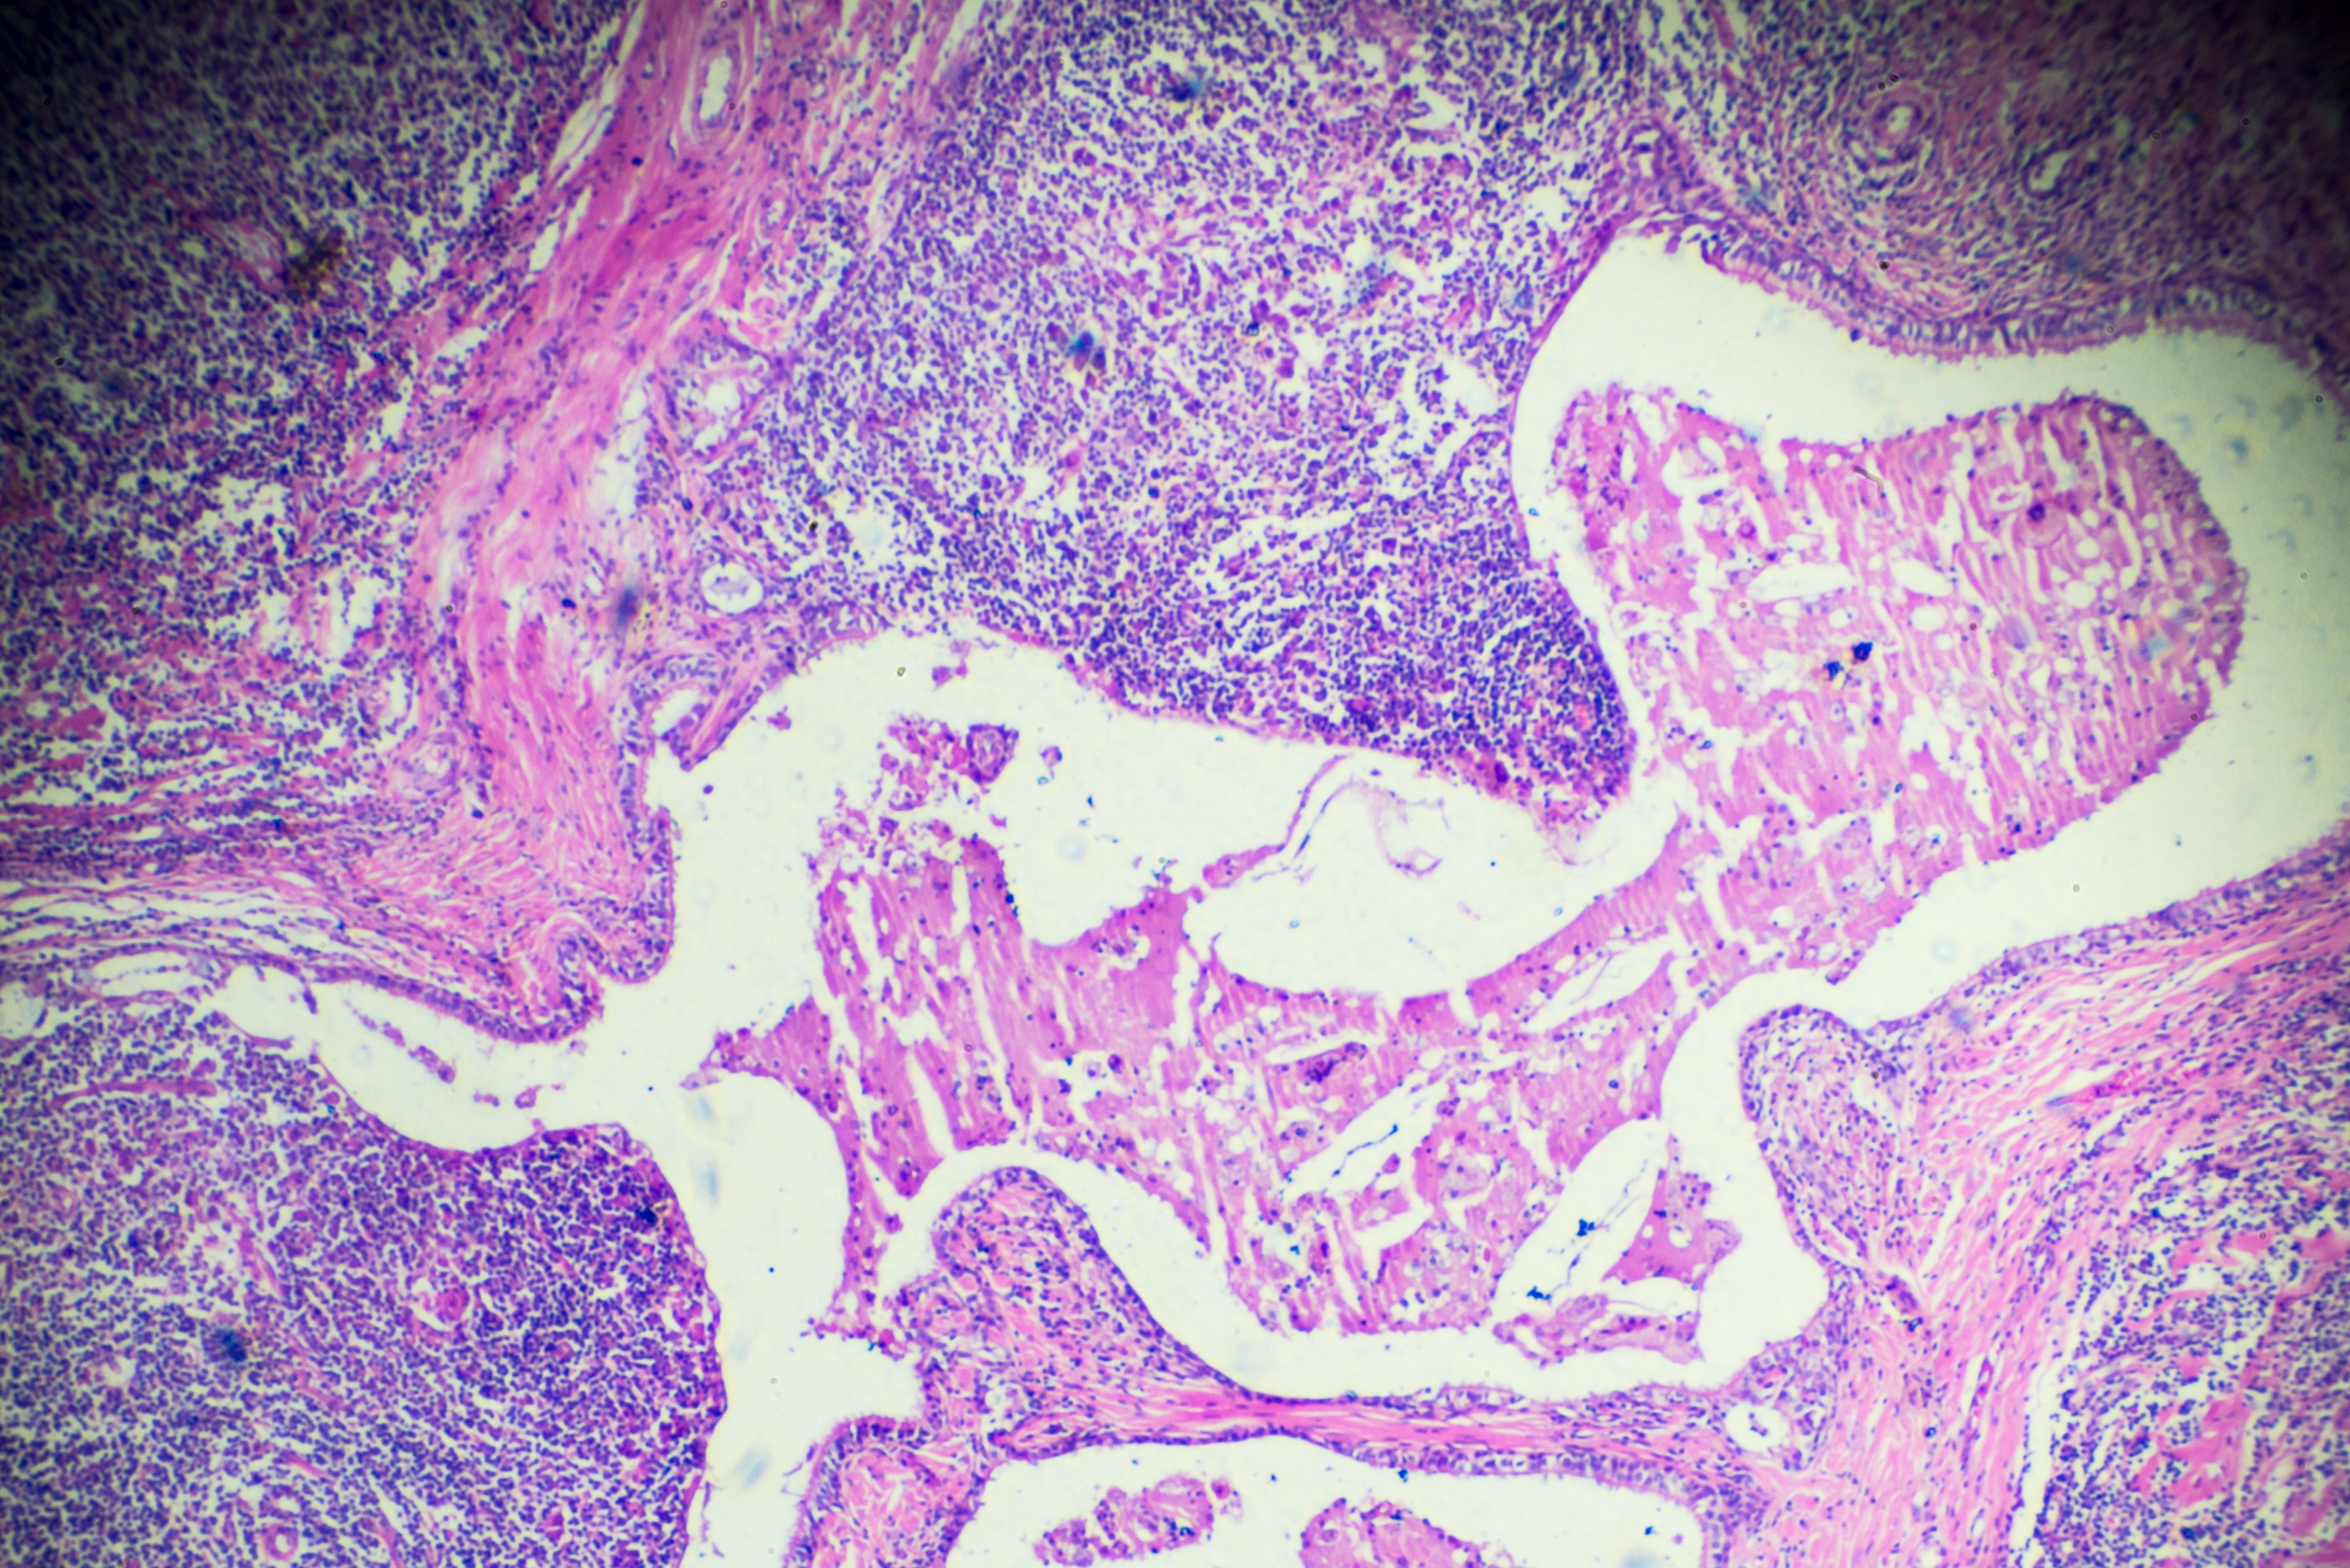 Hodgkins lymphoma cells under a microscope